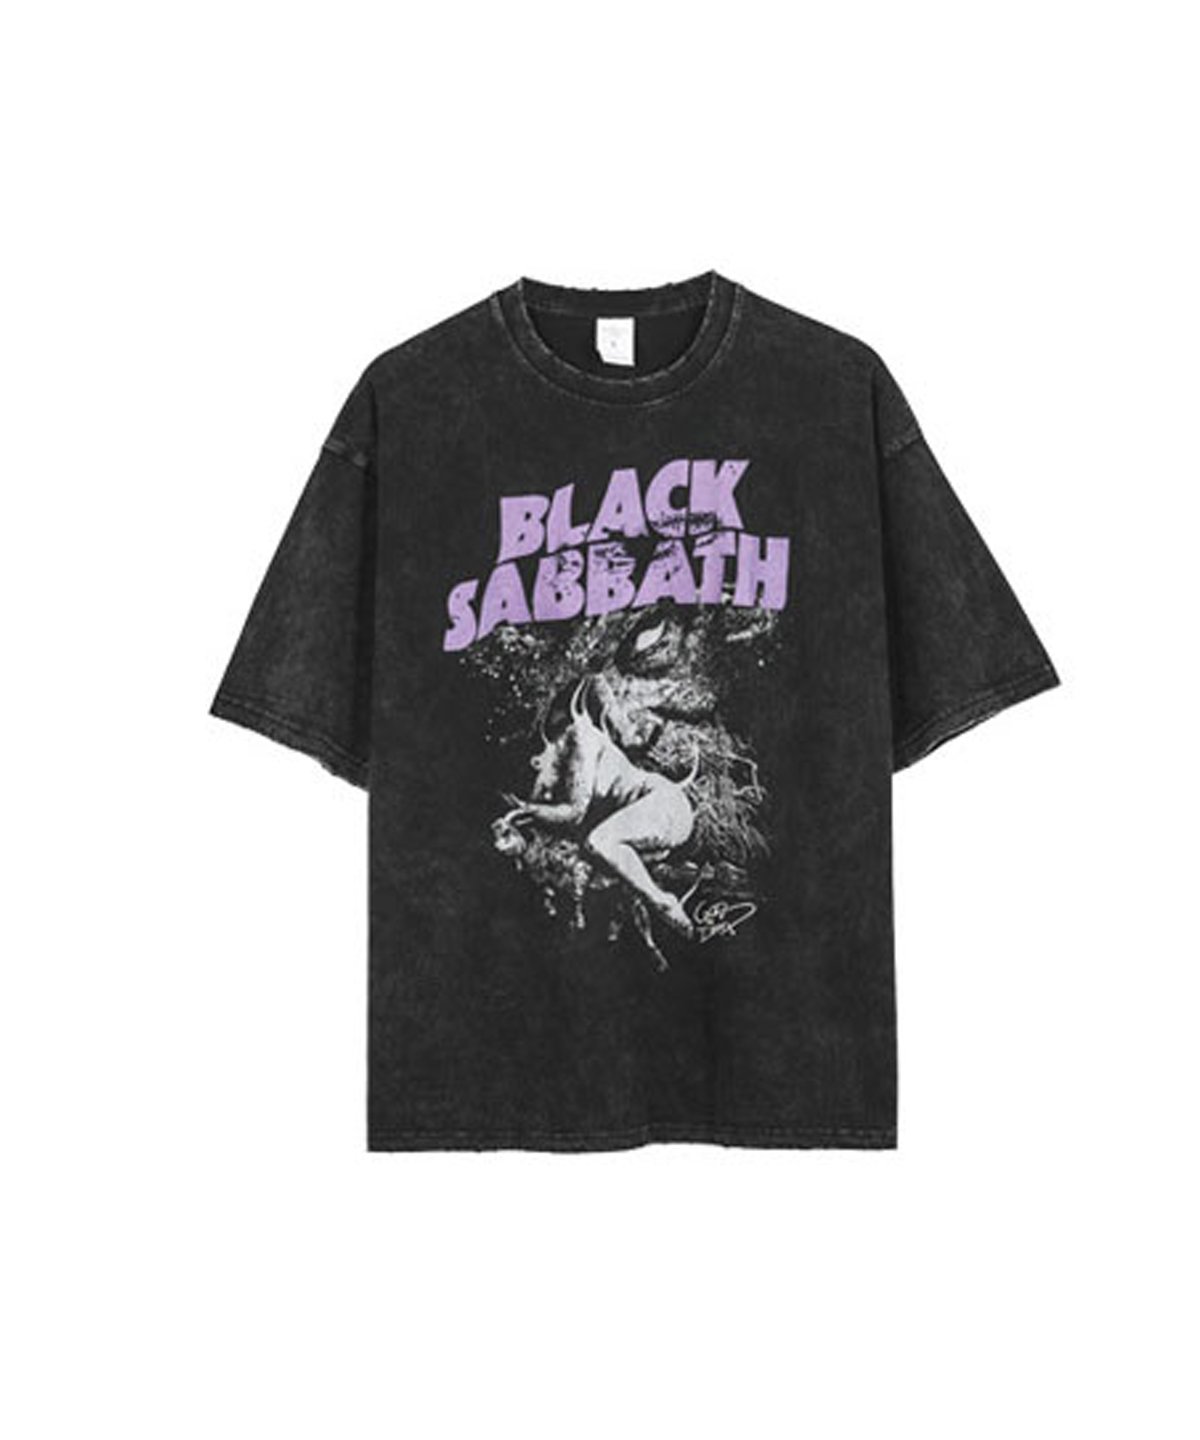 USA Select】 BLACK SABBATH OVERSIZE Vintage T-Shirts.